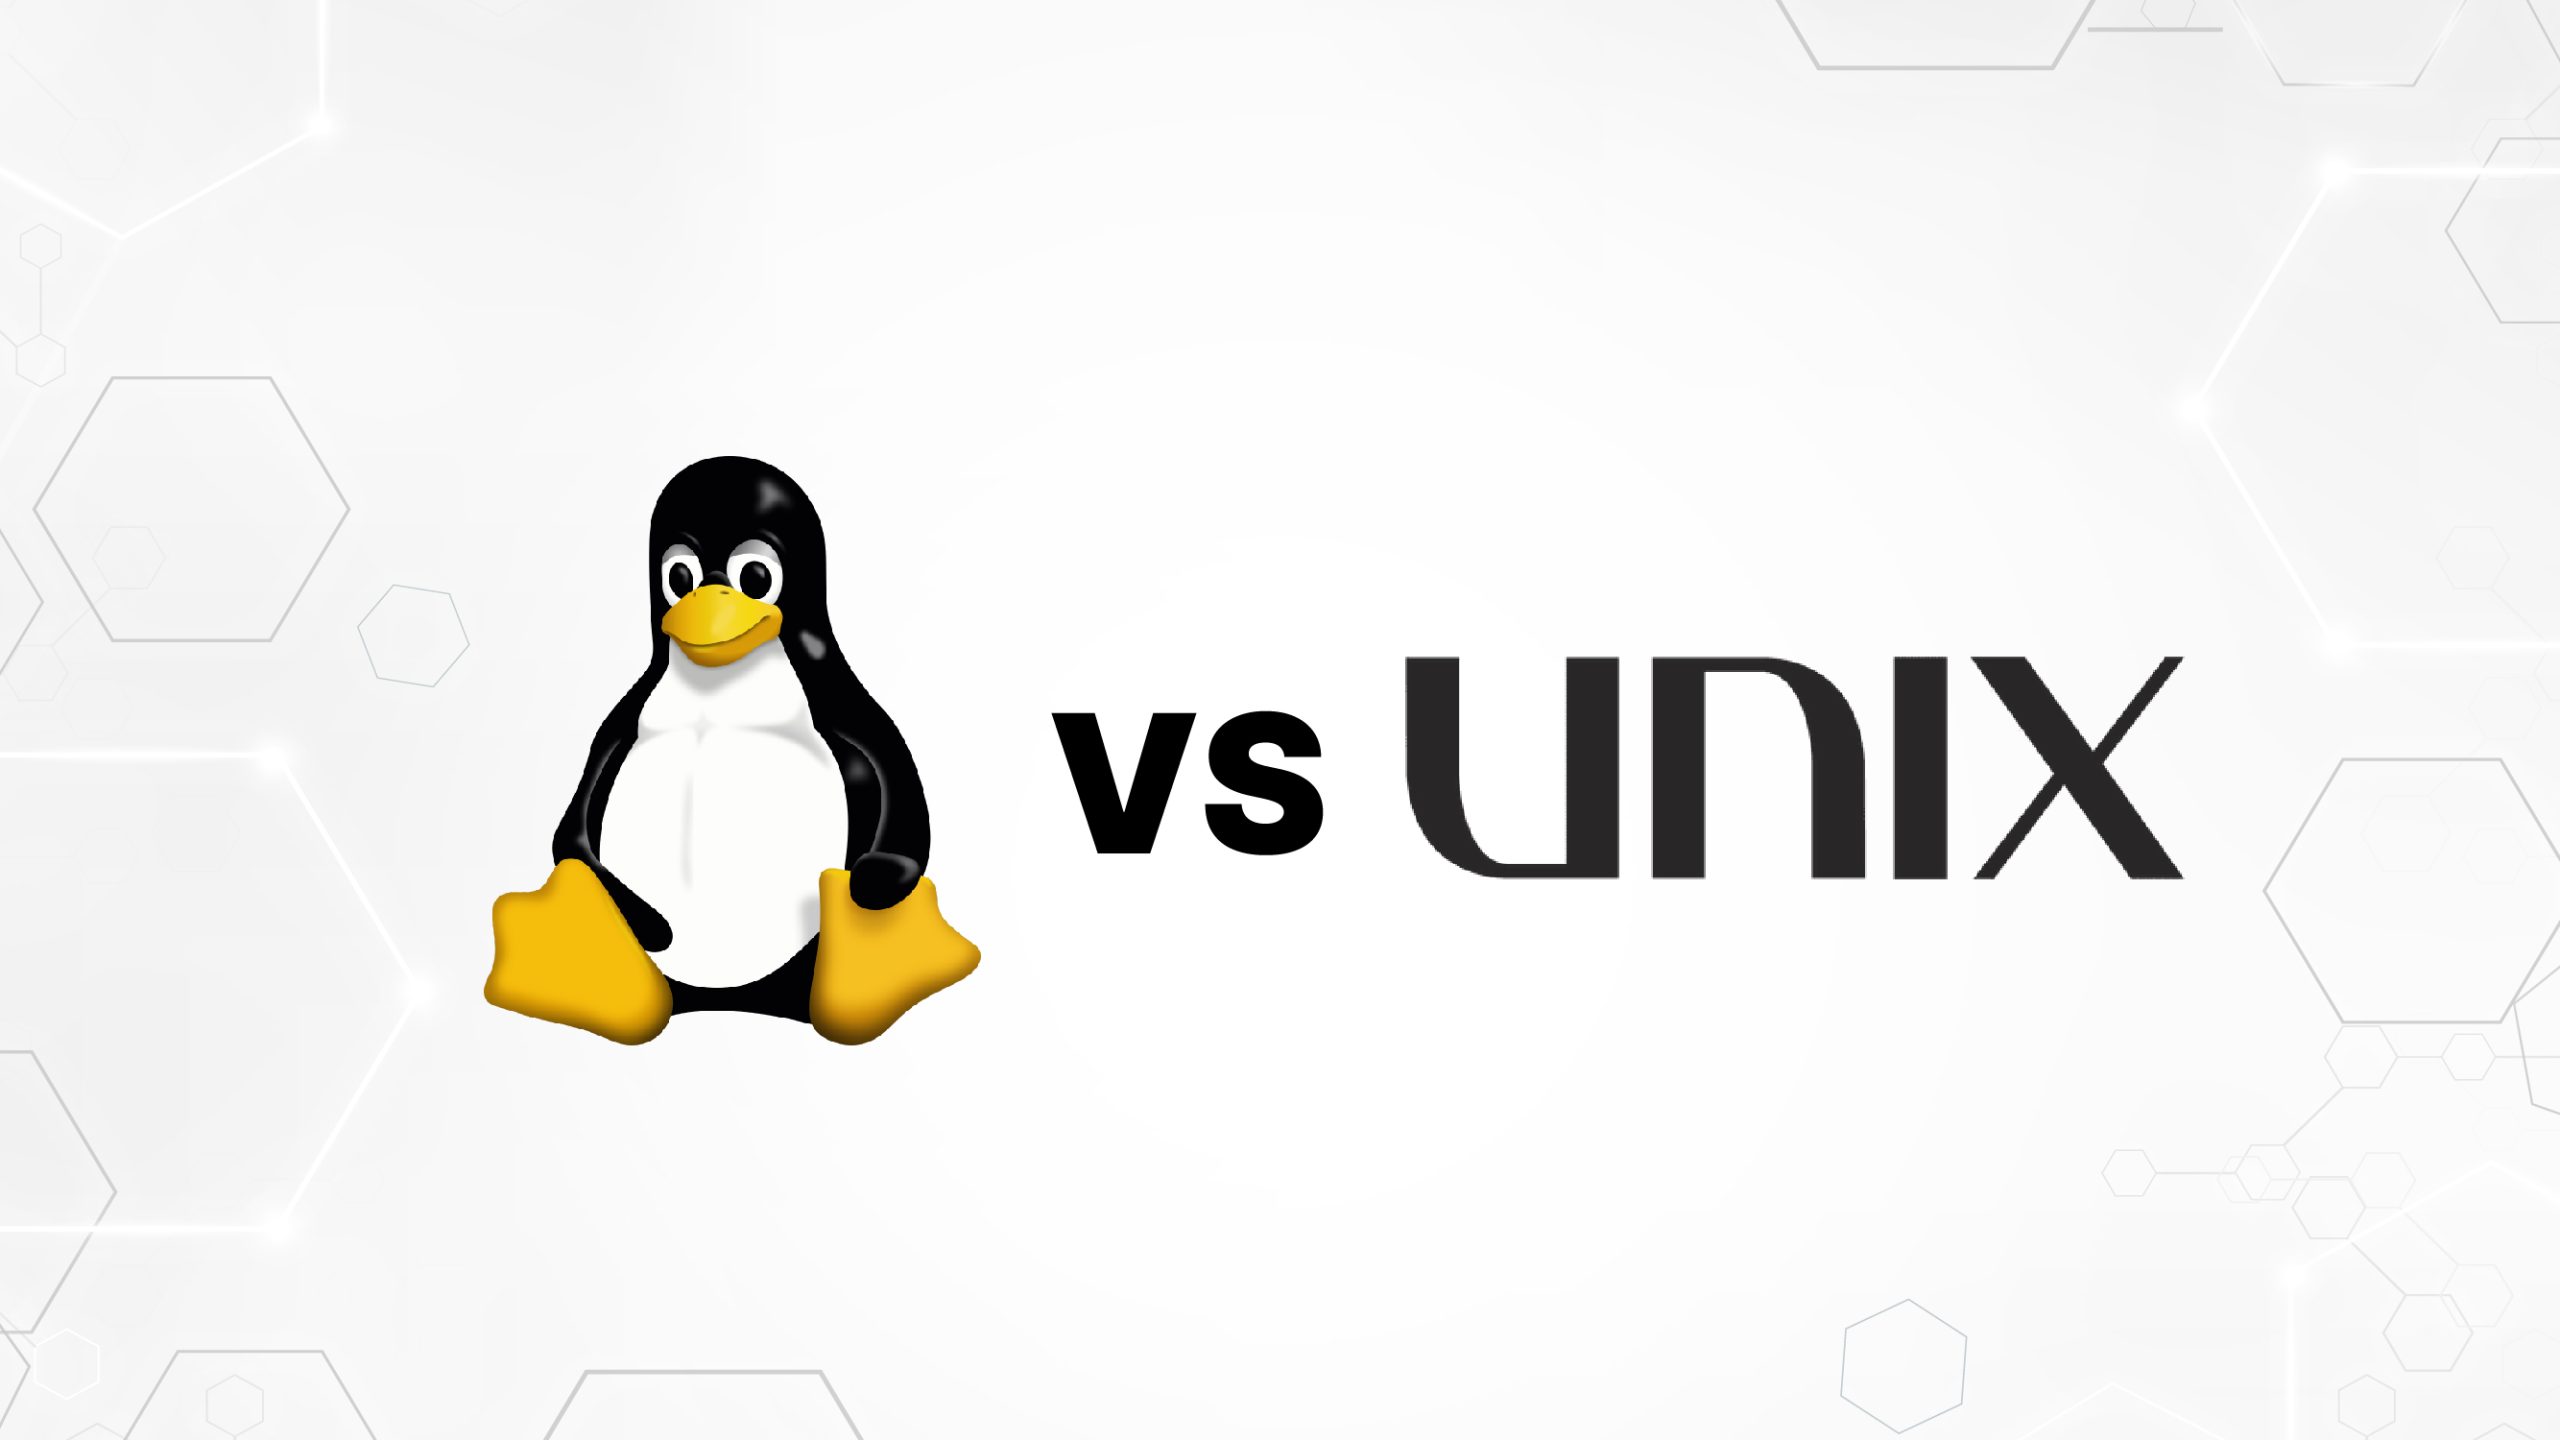 Unix εναντίον Linux: Πώς διαφέρουν αυτά τα δύο λειτουργικά συστήματα